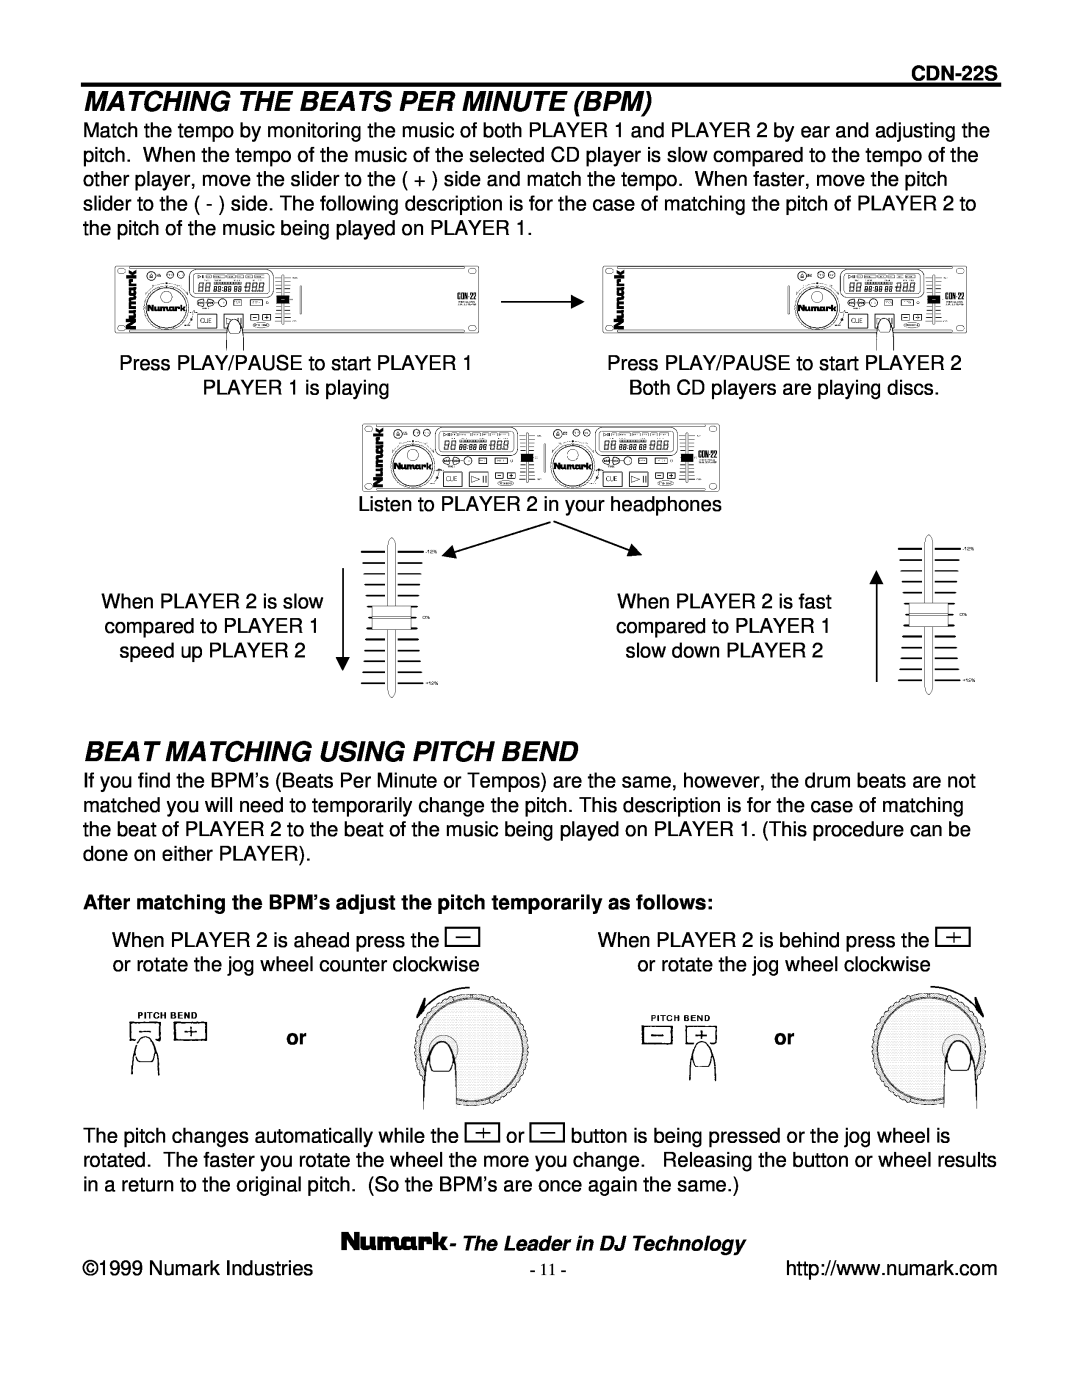 Numark Industries CDN-22S Matching The Beats Per Minute Bpm, Beat Matching Using Pitch Bend, The Leader in DJ Technology 